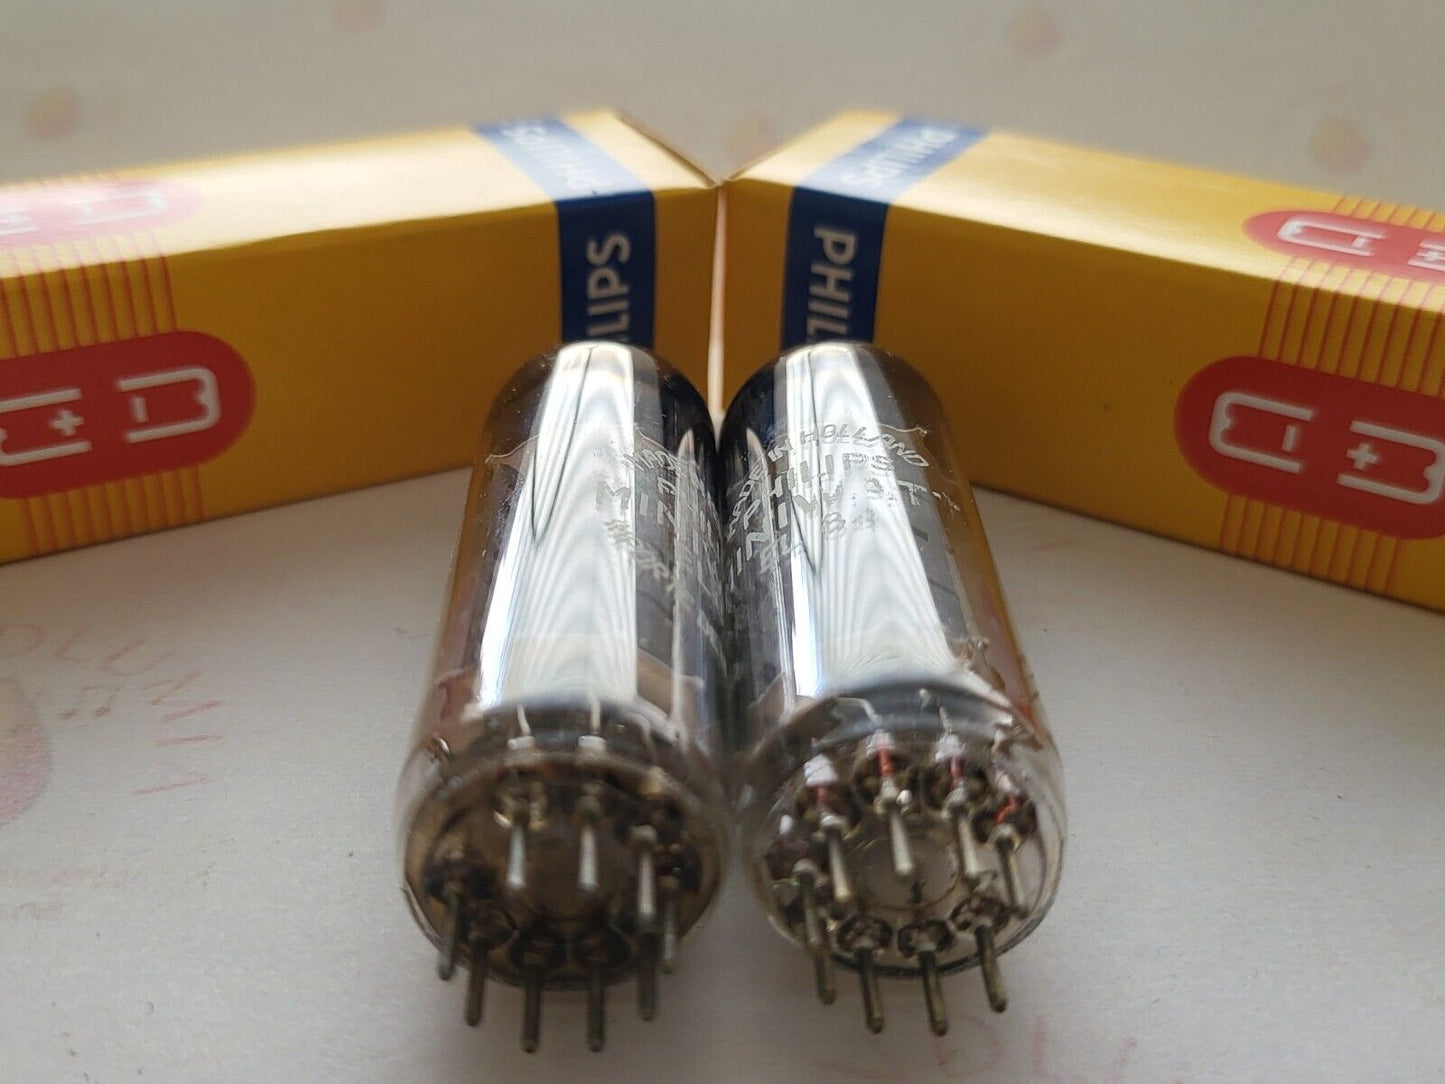 2x Philips Miniwatt EL84 6BQ5 D-getter Tubes - Sittard, NL 1955 rX1/rX2 - NOS